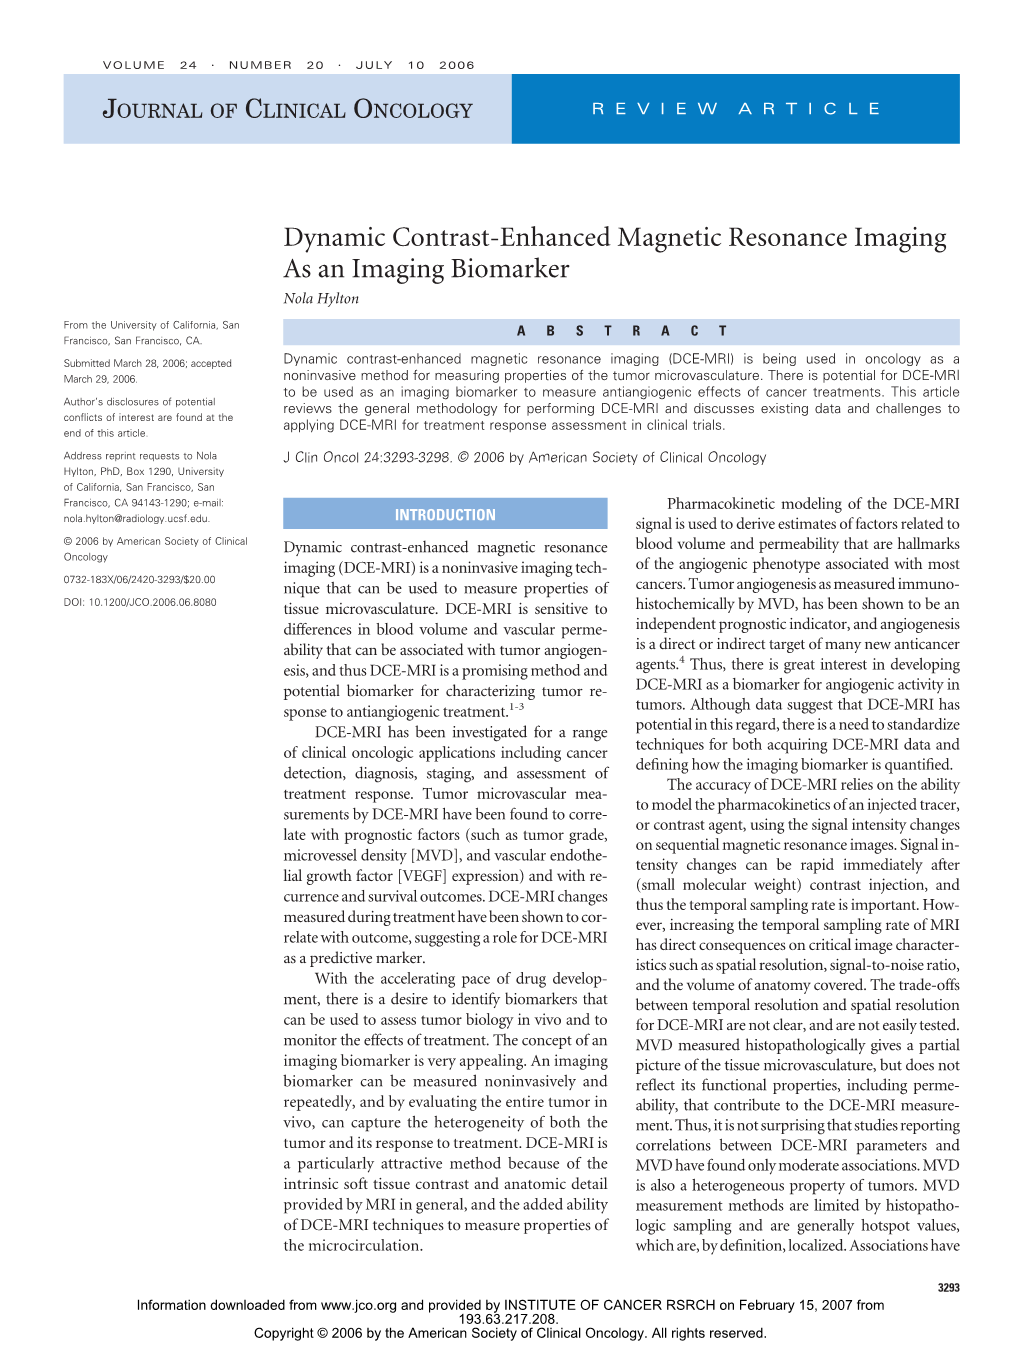 Dynamic Contrast-Enhanced Magnetic Resonance Imaging As an Imaging Biomarker Nola Hylton